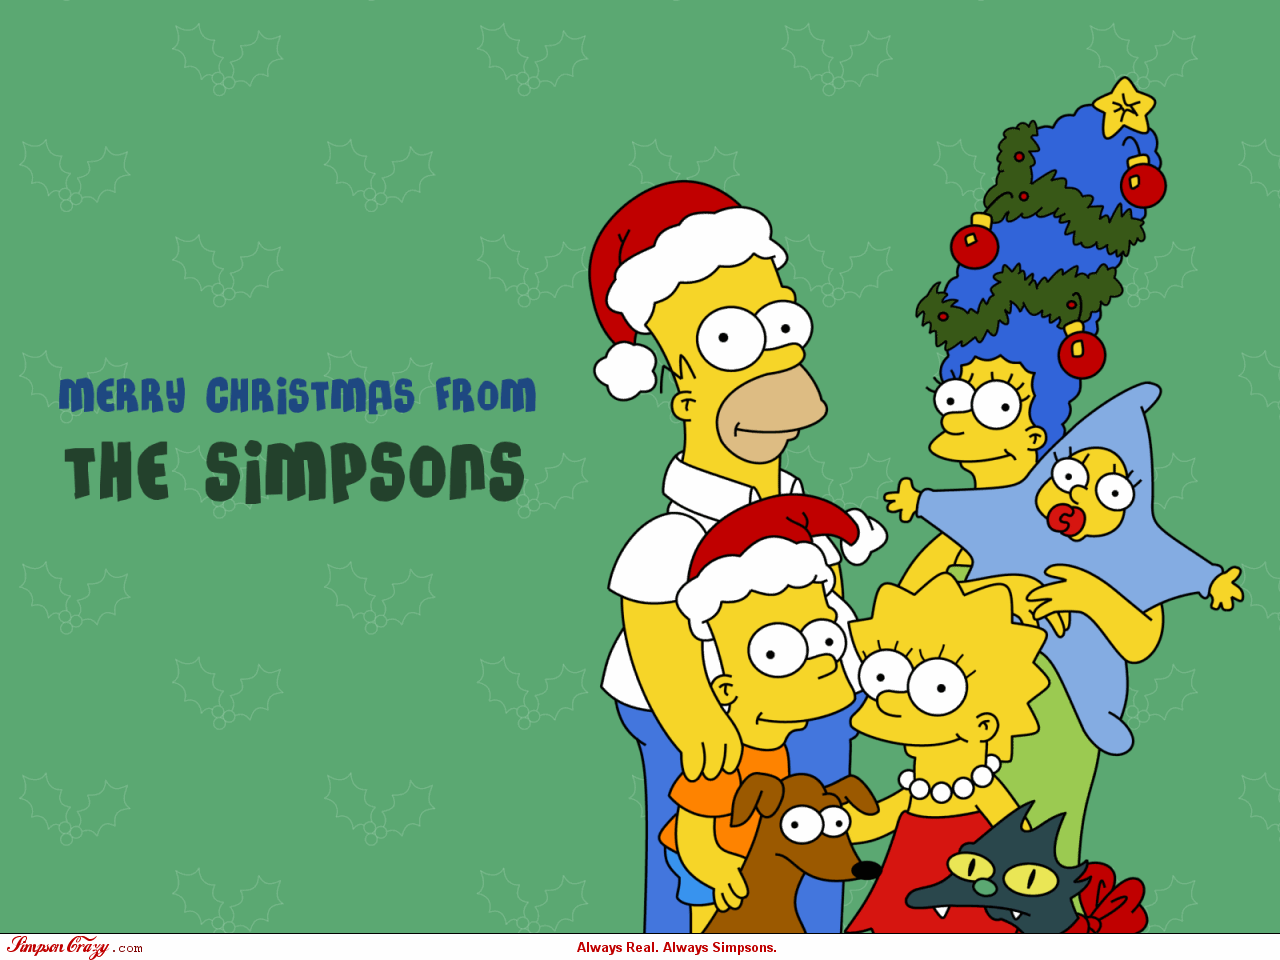 Simpsons Christmas wallpaper!